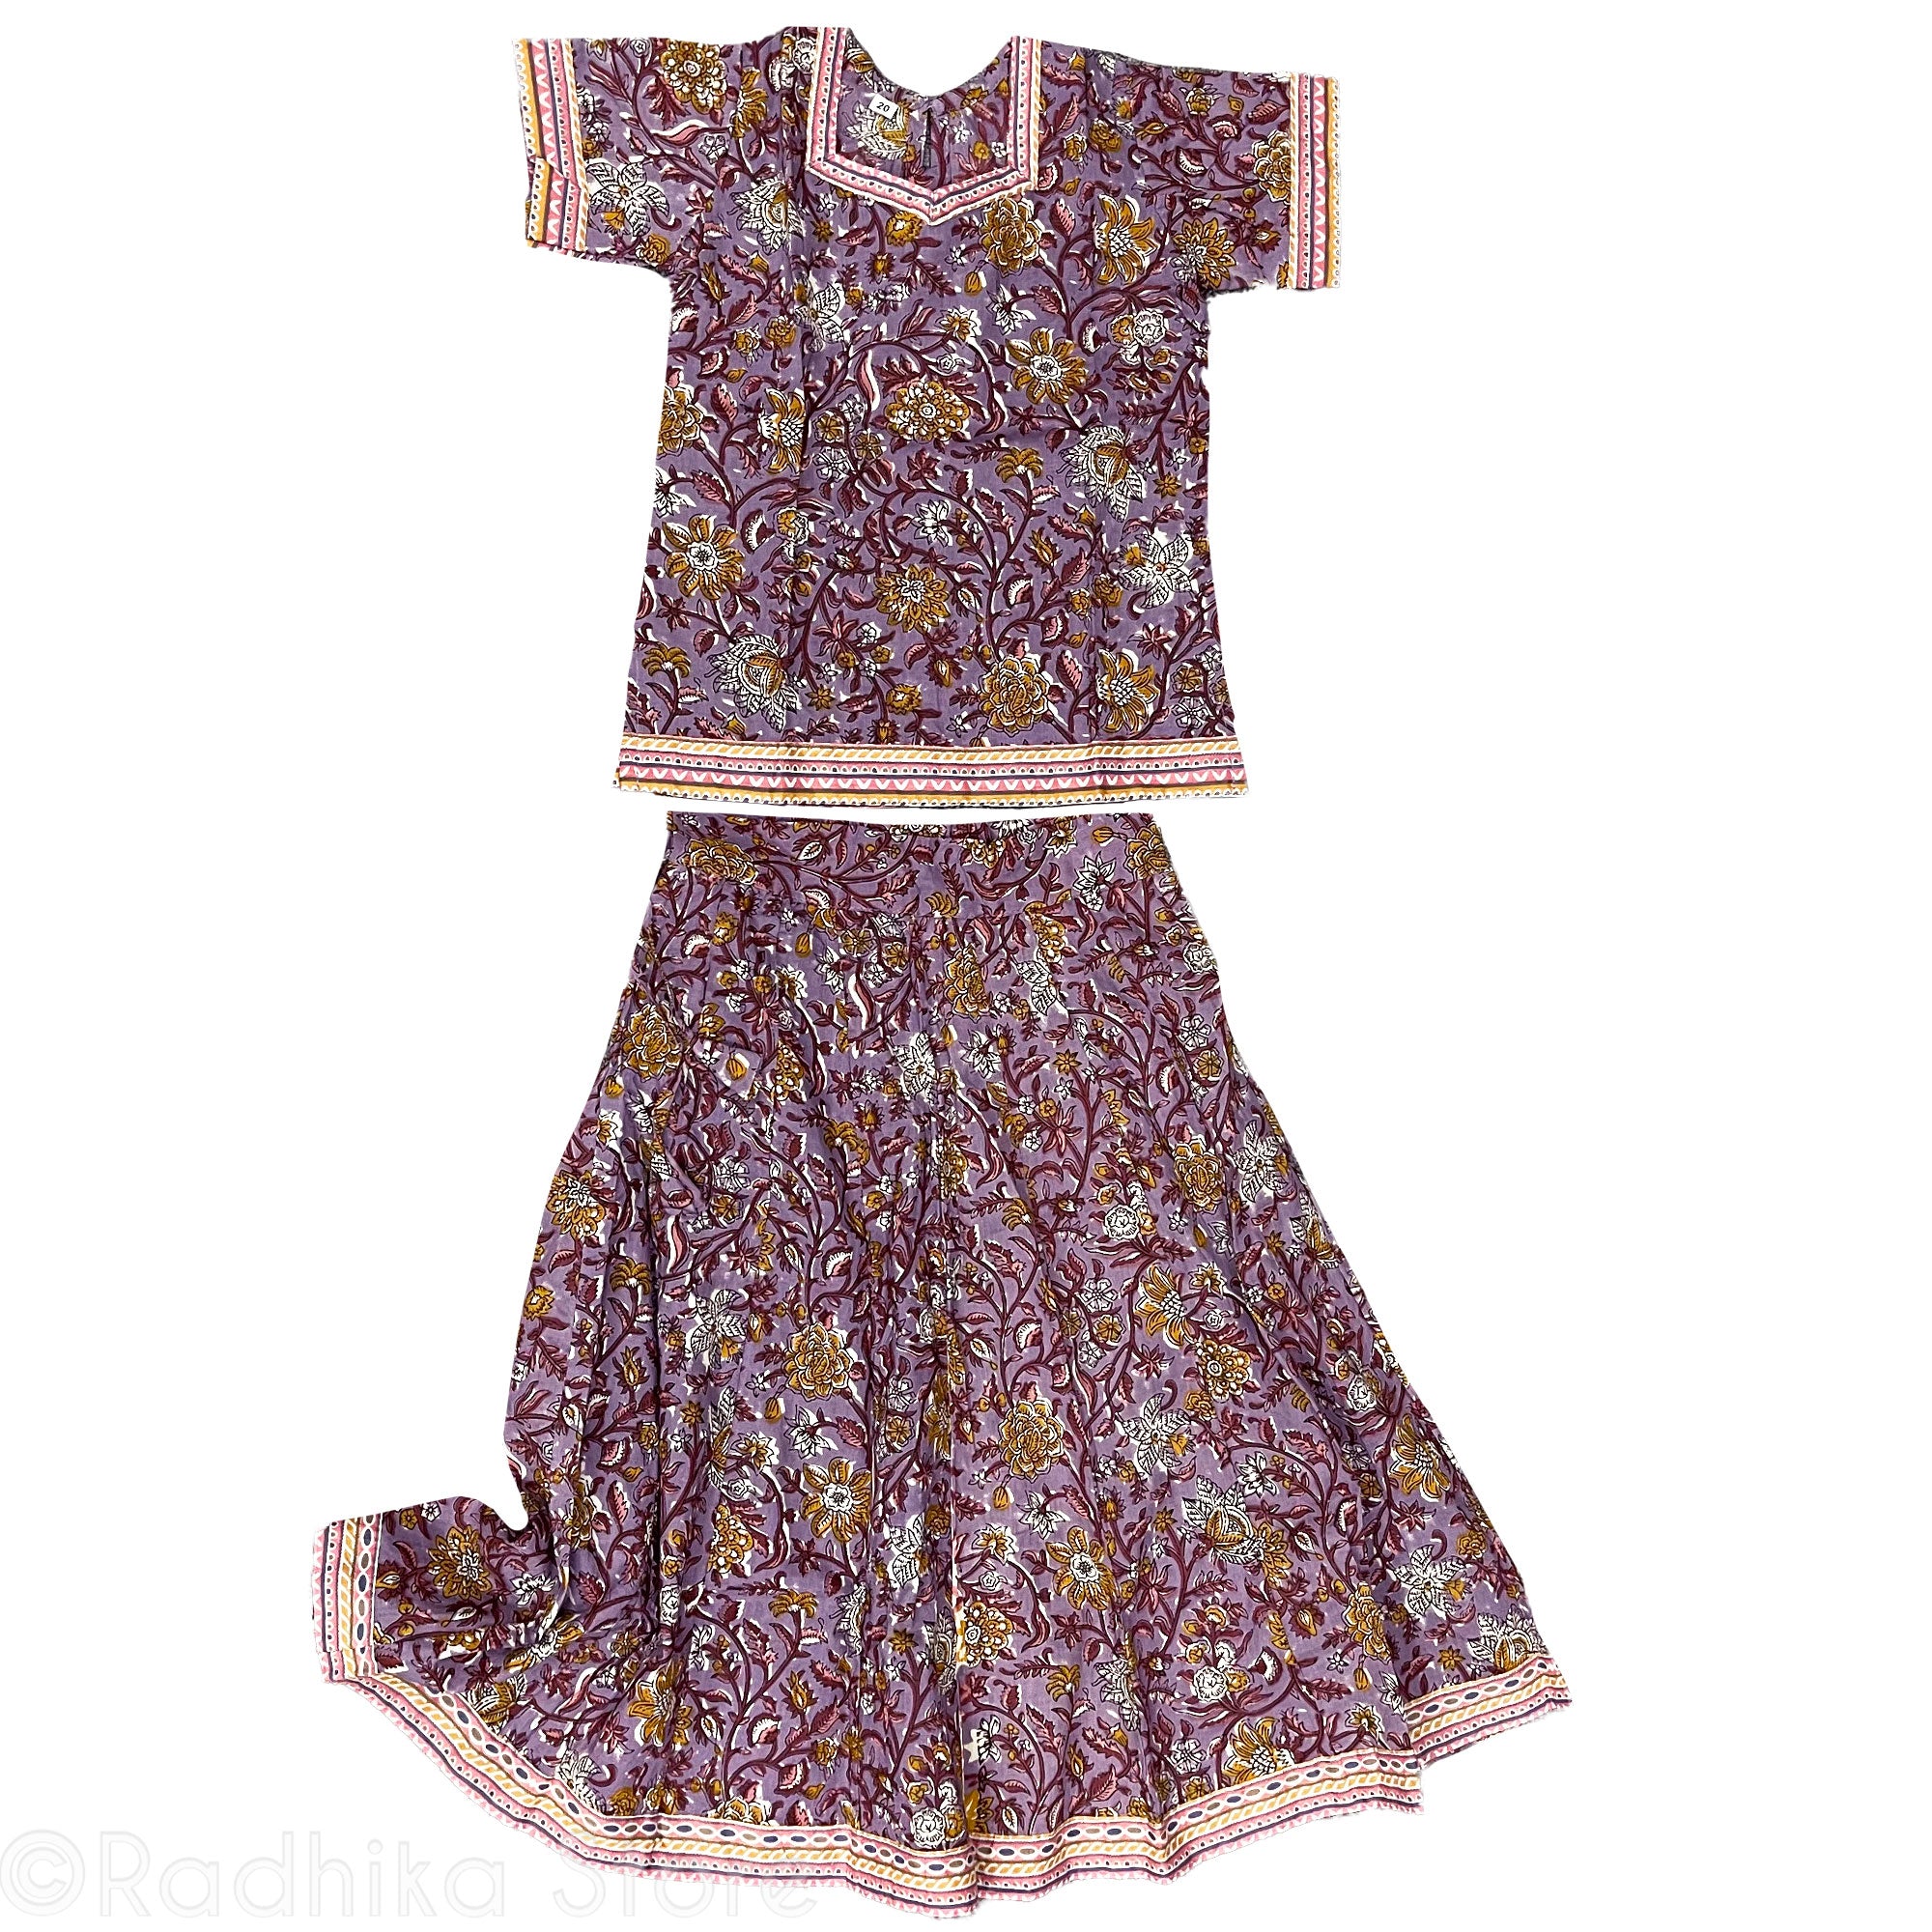 Girls Gopi Skirt Outfit - Lavender Fields Forever-Cotton Screen Print